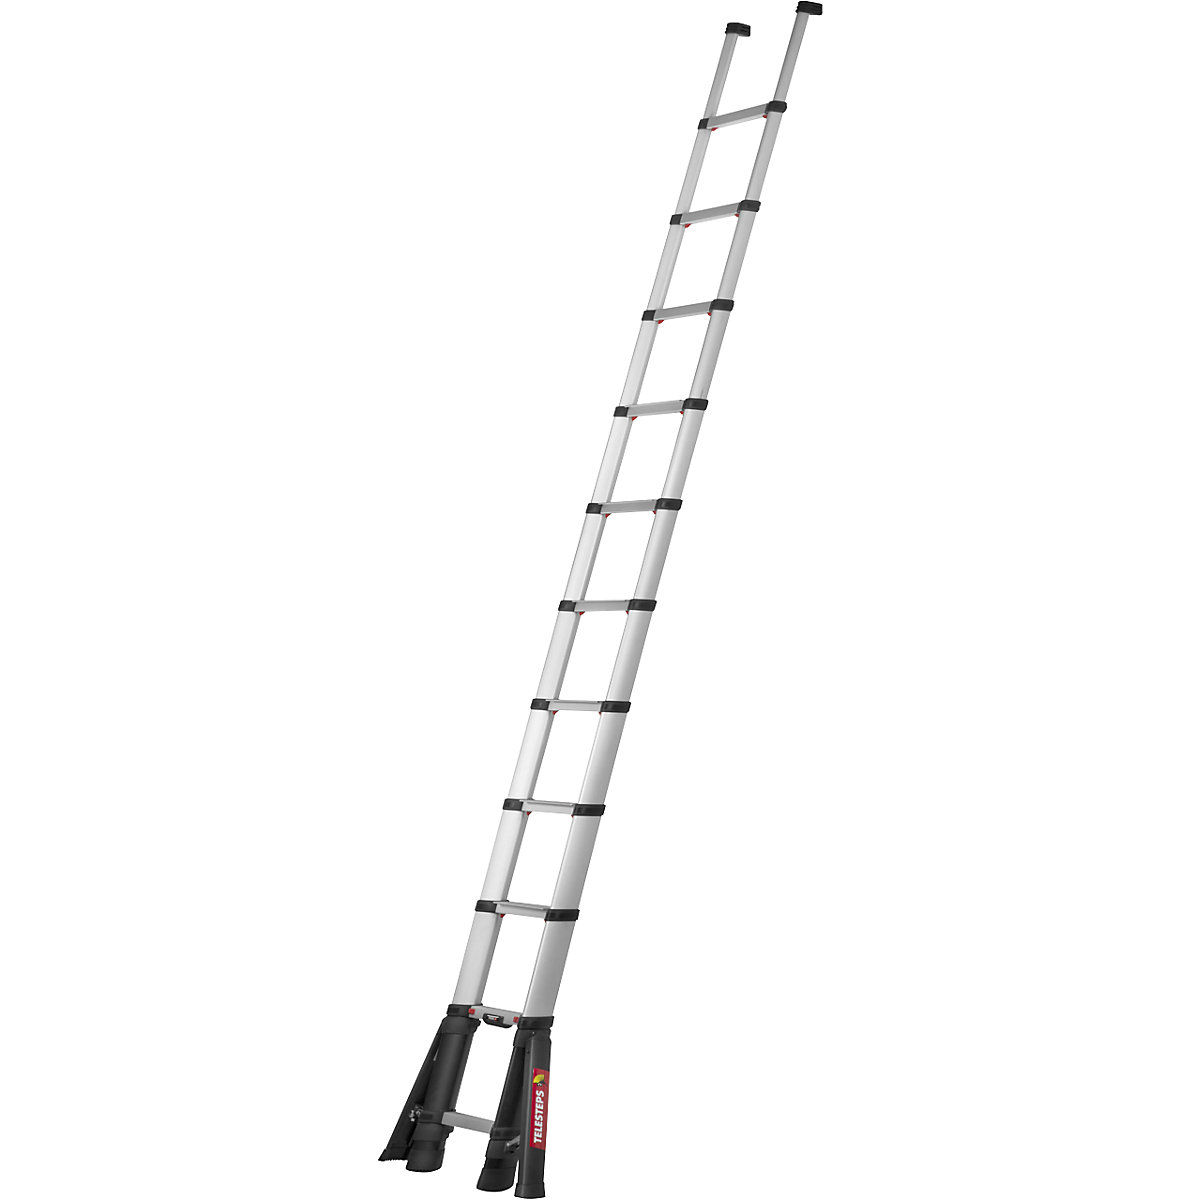 PRIME LINE telescopic lean-to ladder - Telesteps